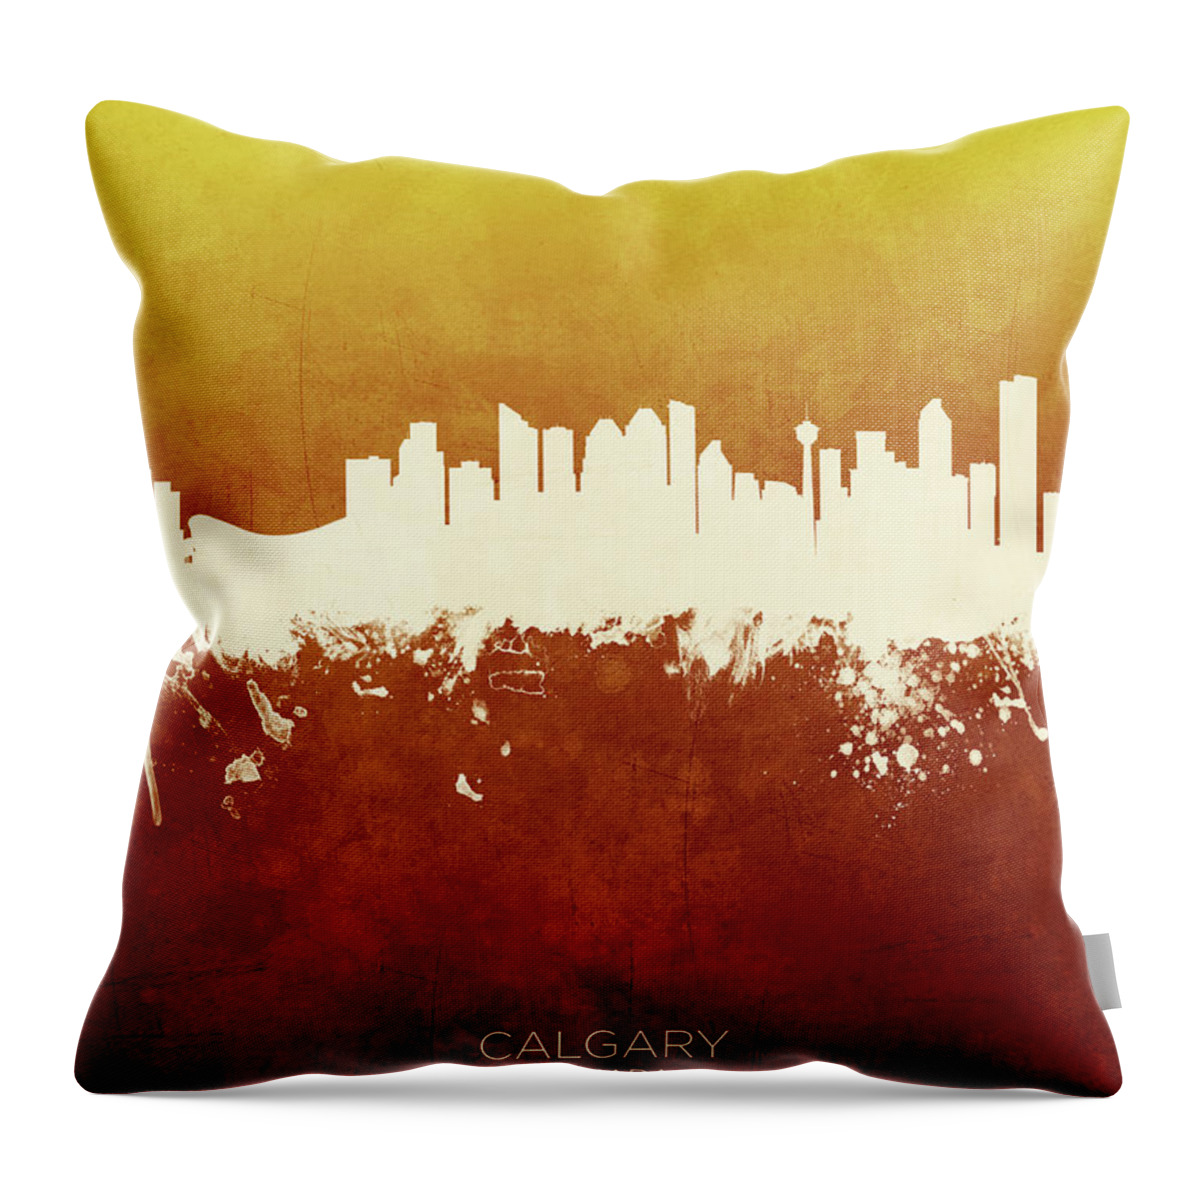 Calgary Throw Pillow featuring the digital art Calgary Canada Skyline #15 by Michael Tompsett